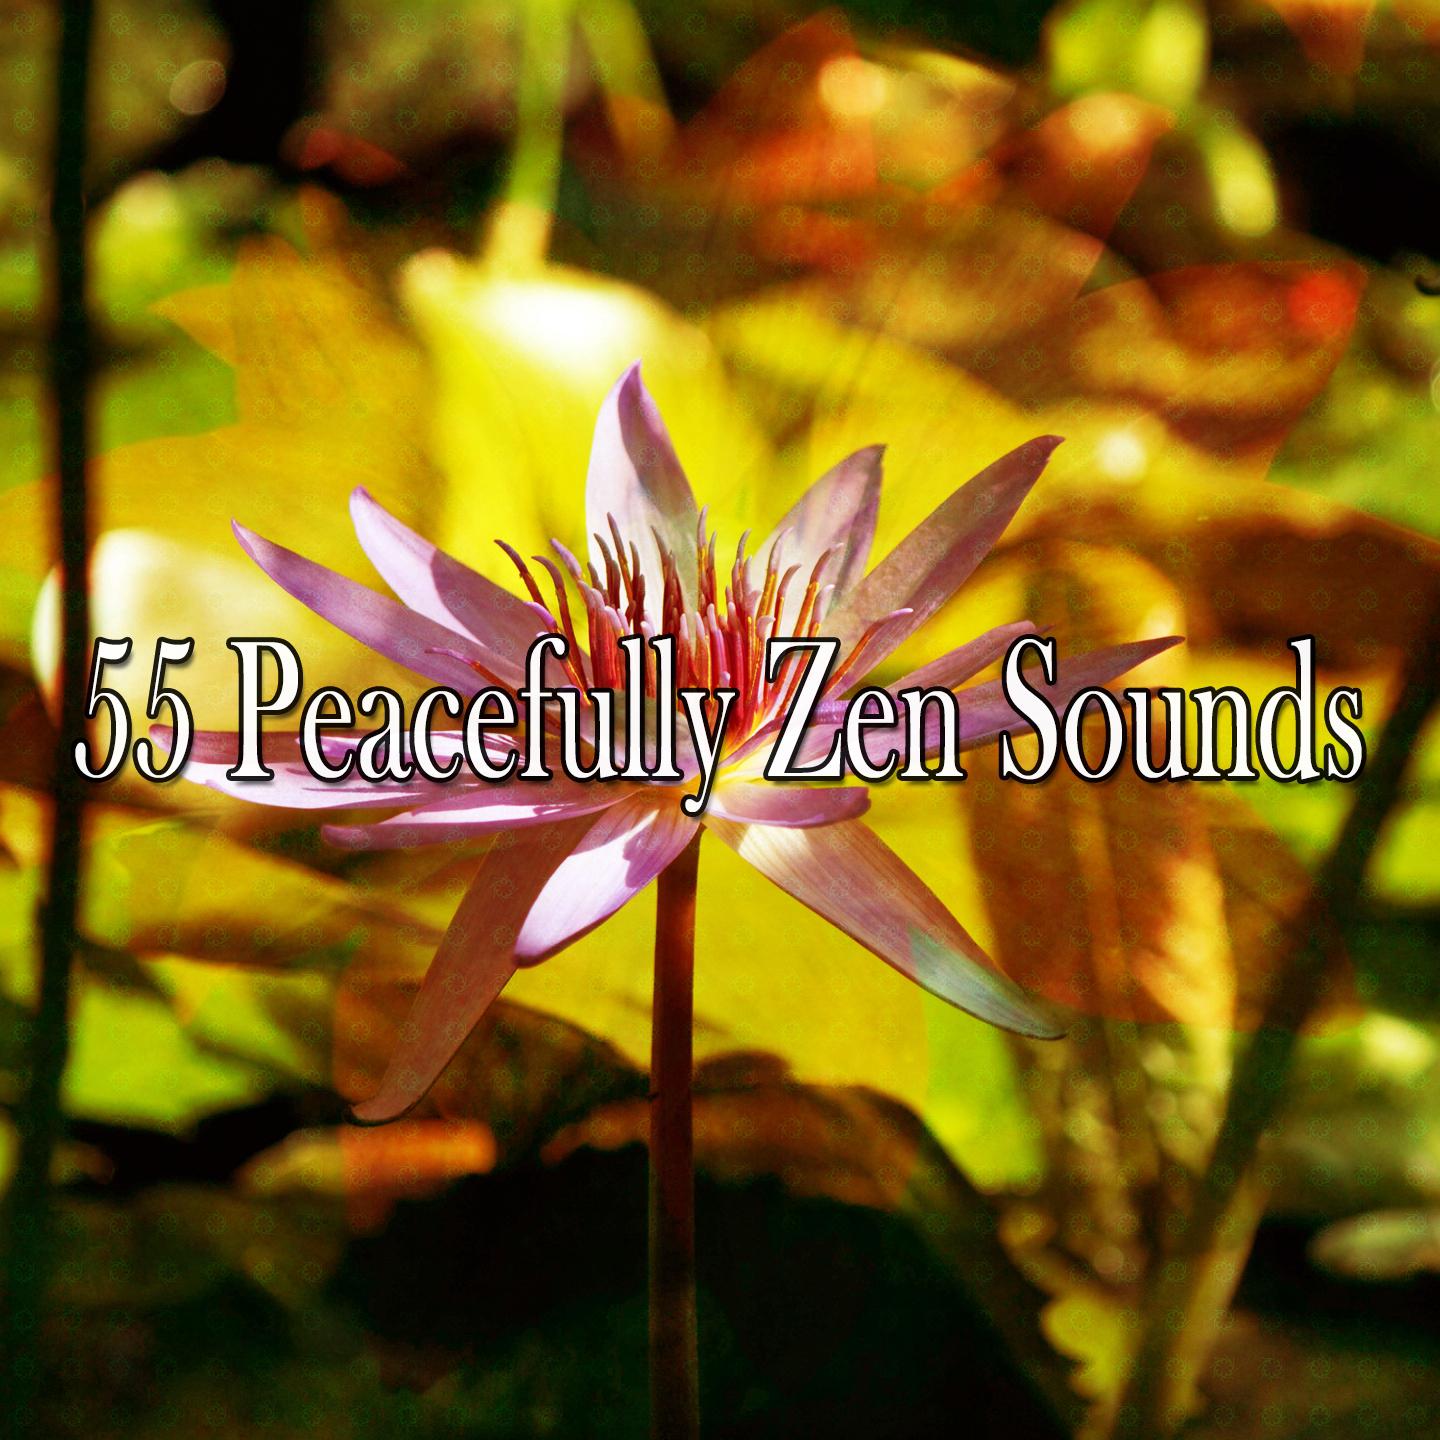 55 Peacefully Zen Sounds